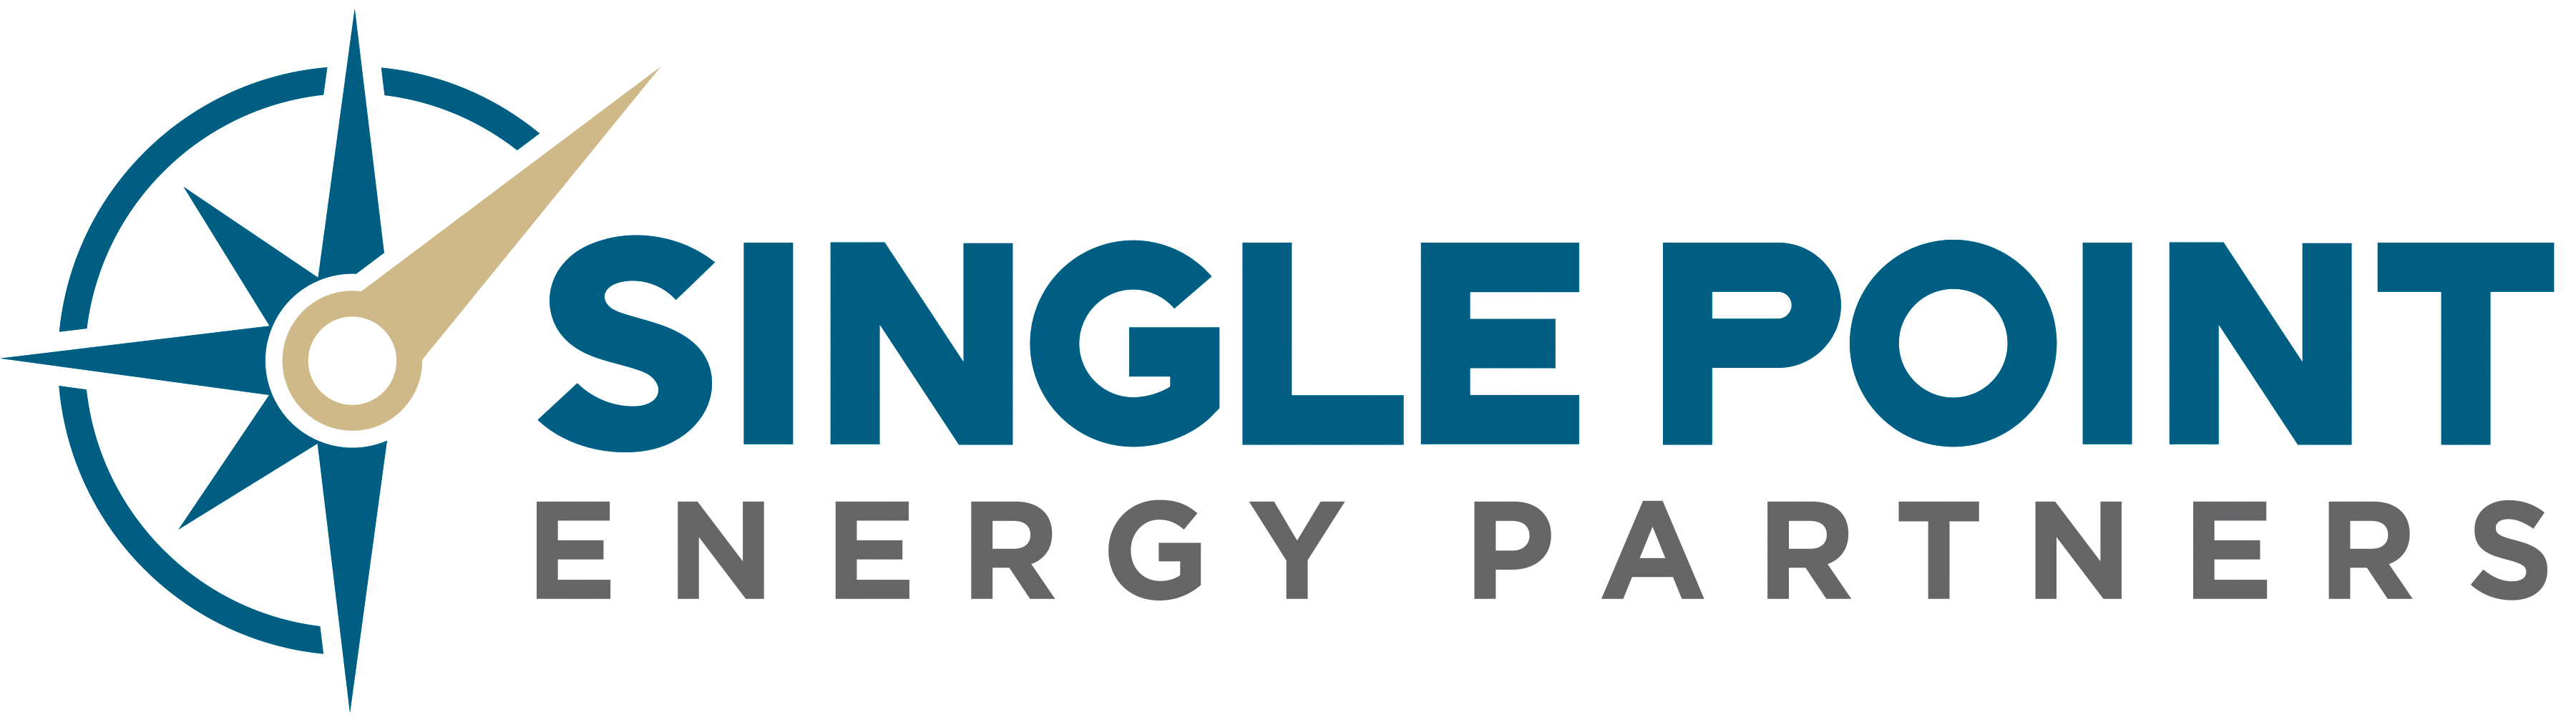 Single Point Energy Partners